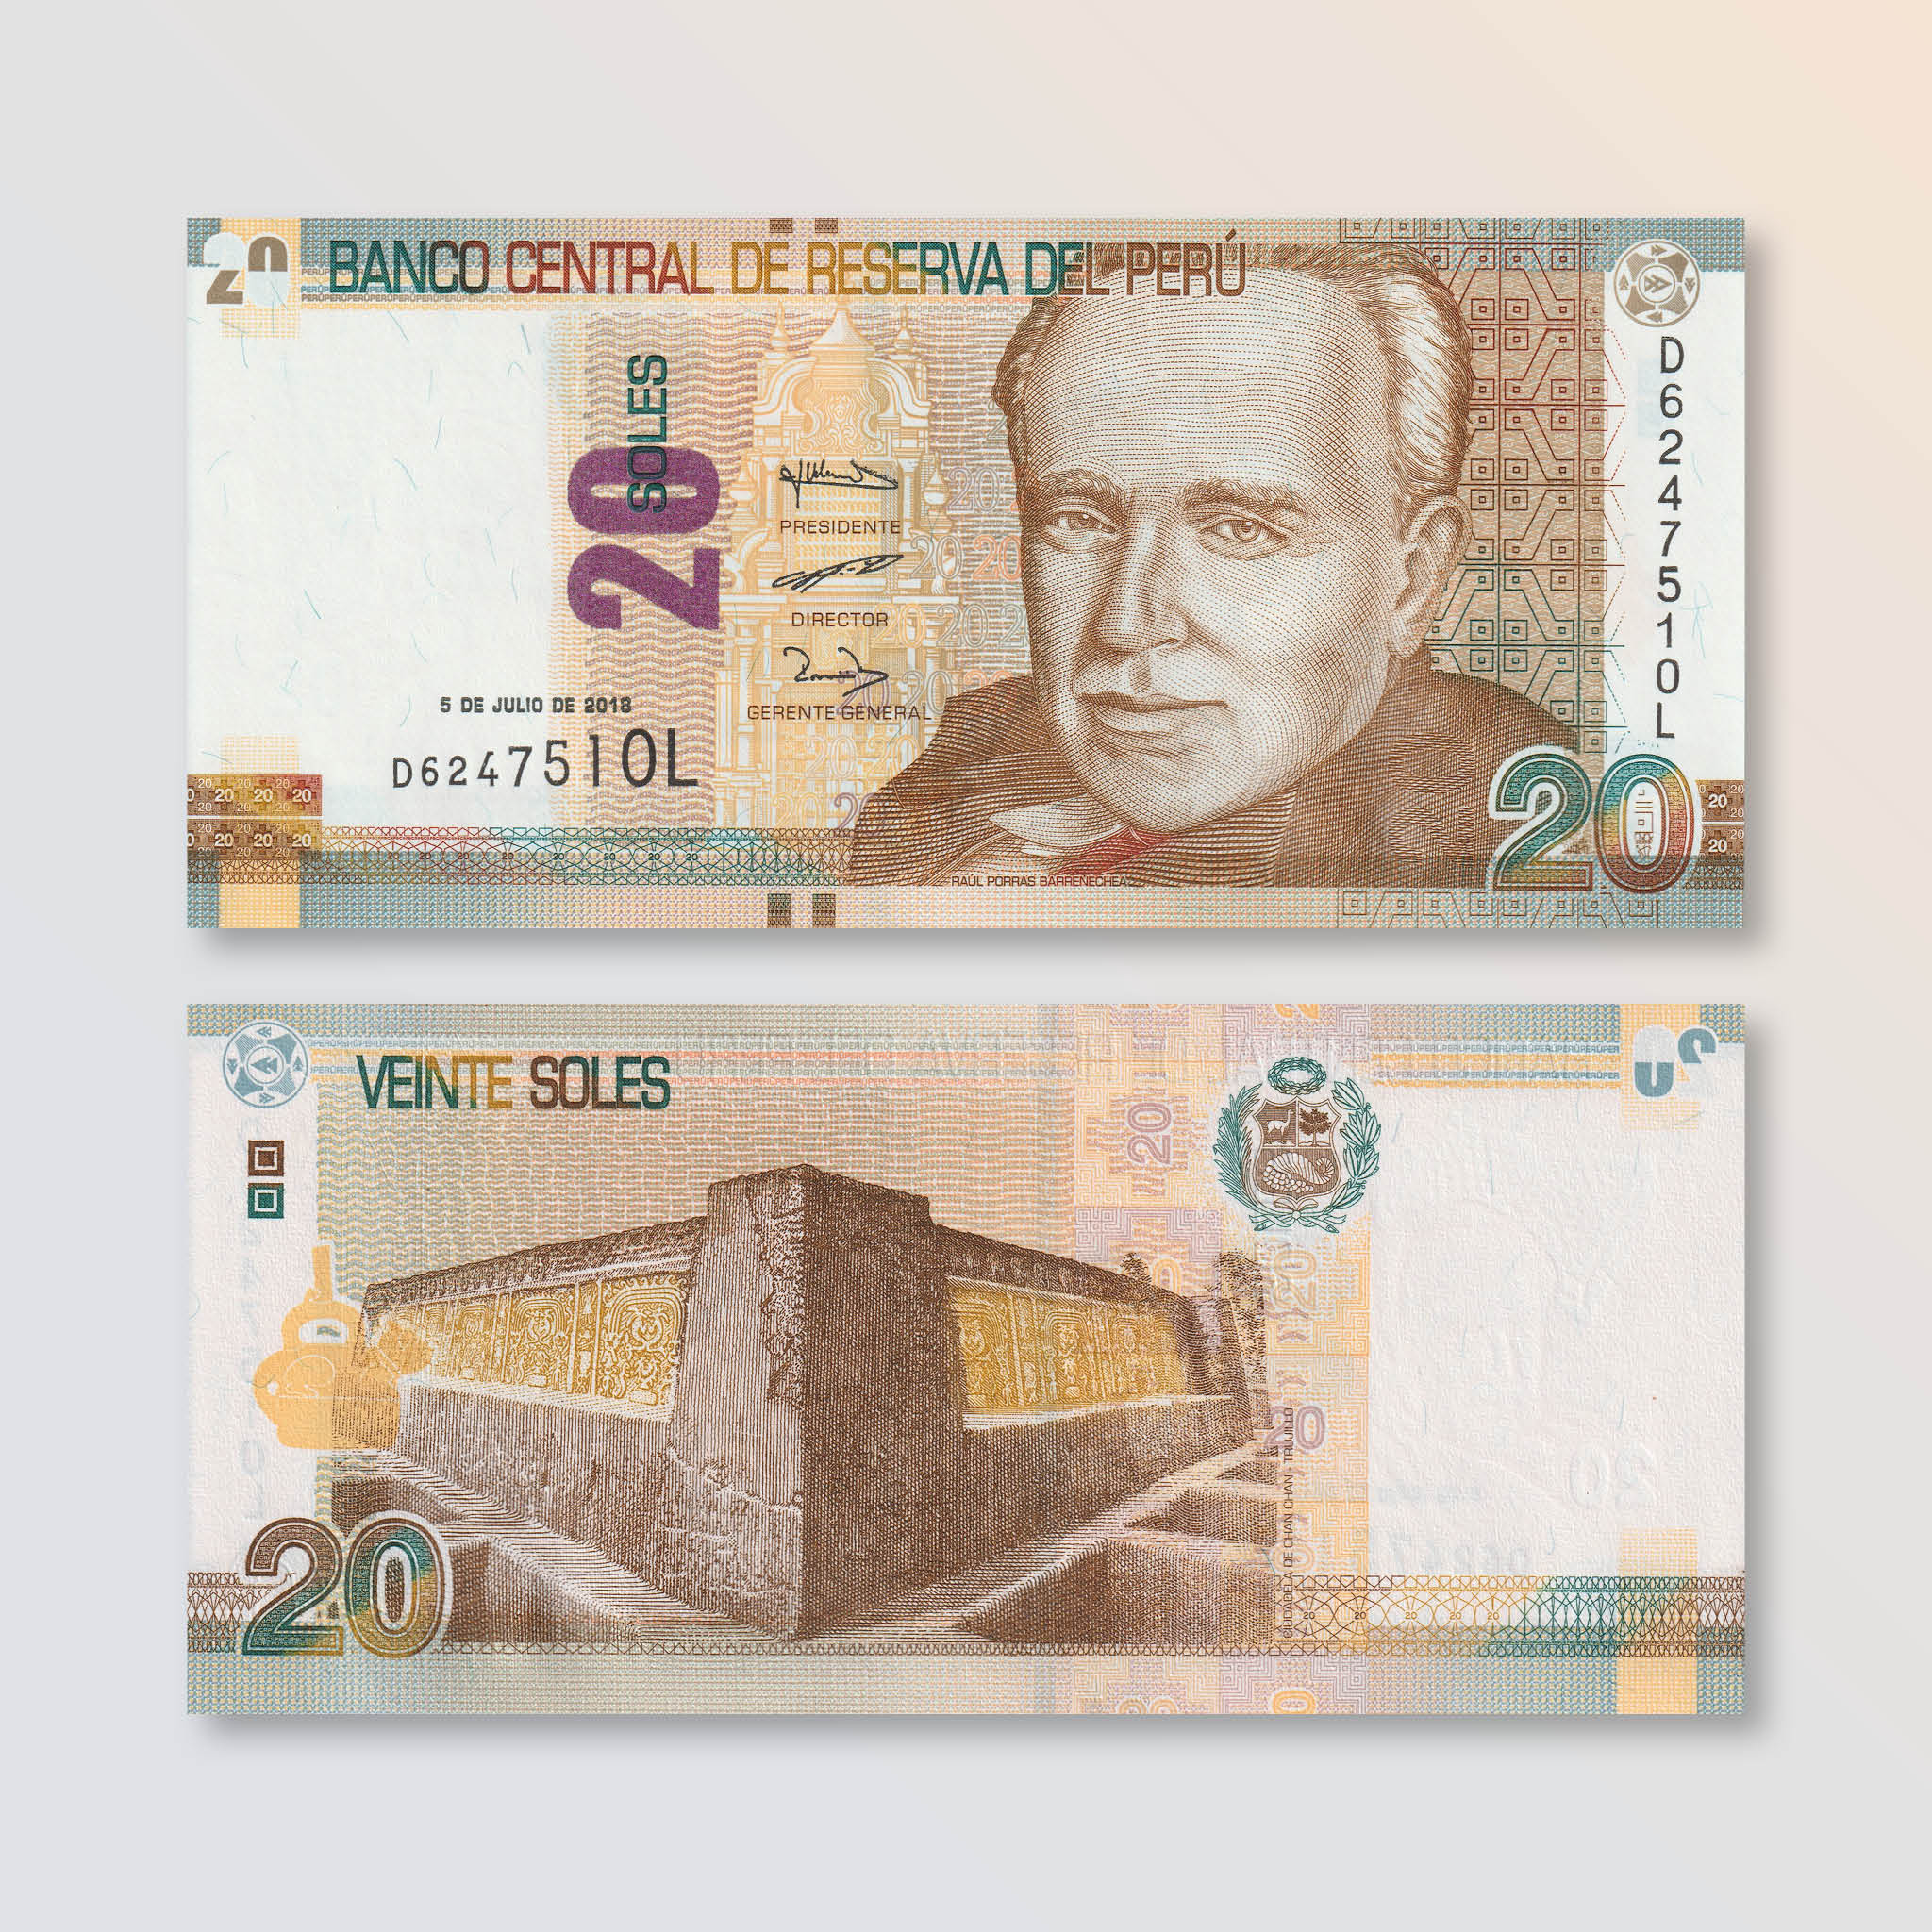 Peru 20 Soles, 2018, B533b, P193, UNC - Robert's World Money - World Banknotes